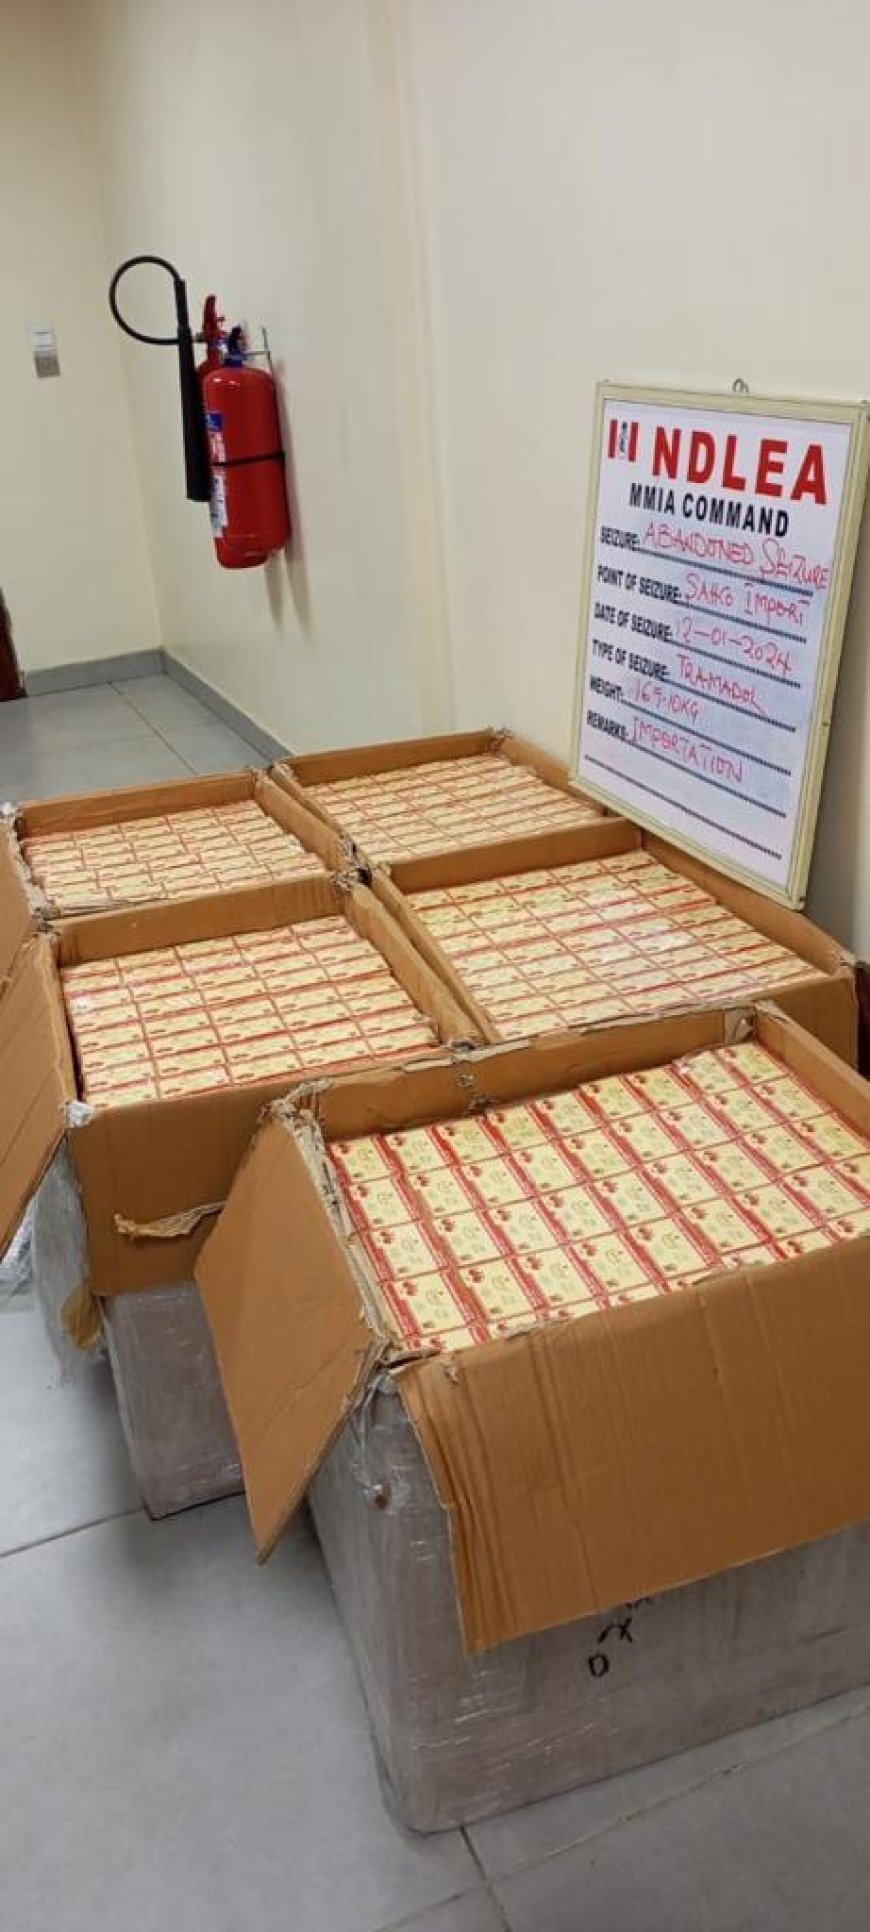 NDLEA Raids Illegal Drug Manufacturing Factory In Ibadan...Seizes 300,000 Tramadol Pills From Pakistan